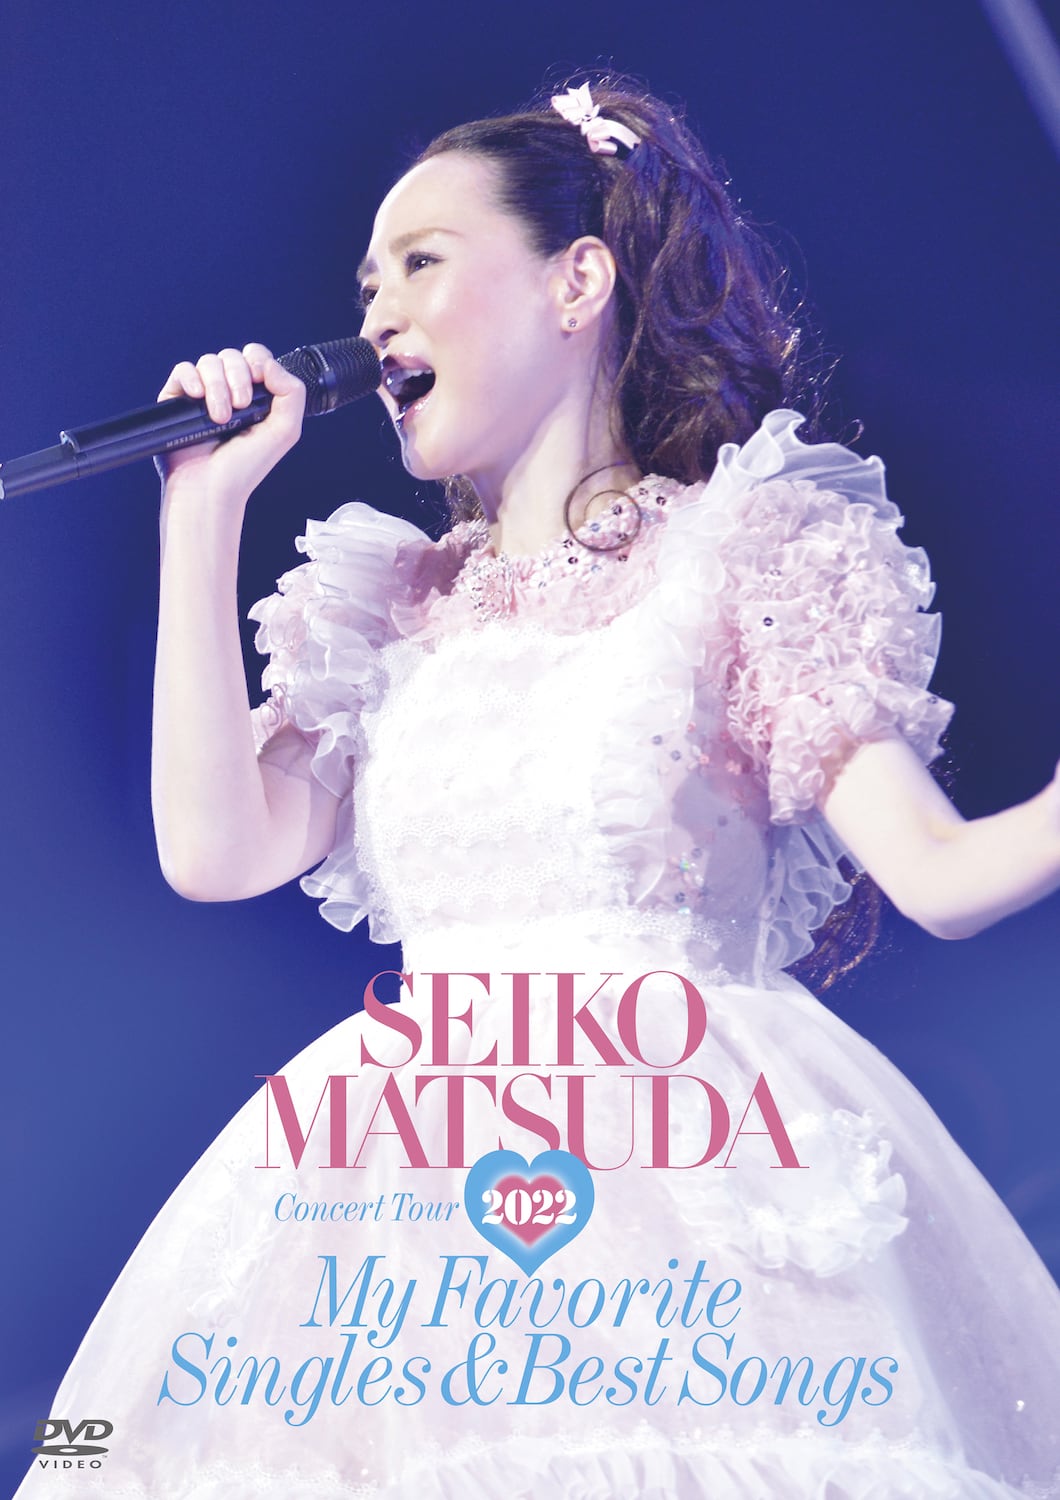 Seiko Matsuda Concert Tour 2022 “My Favorite Singles & Best Songs” at Saitama Super Arena 通常盤（DVD）